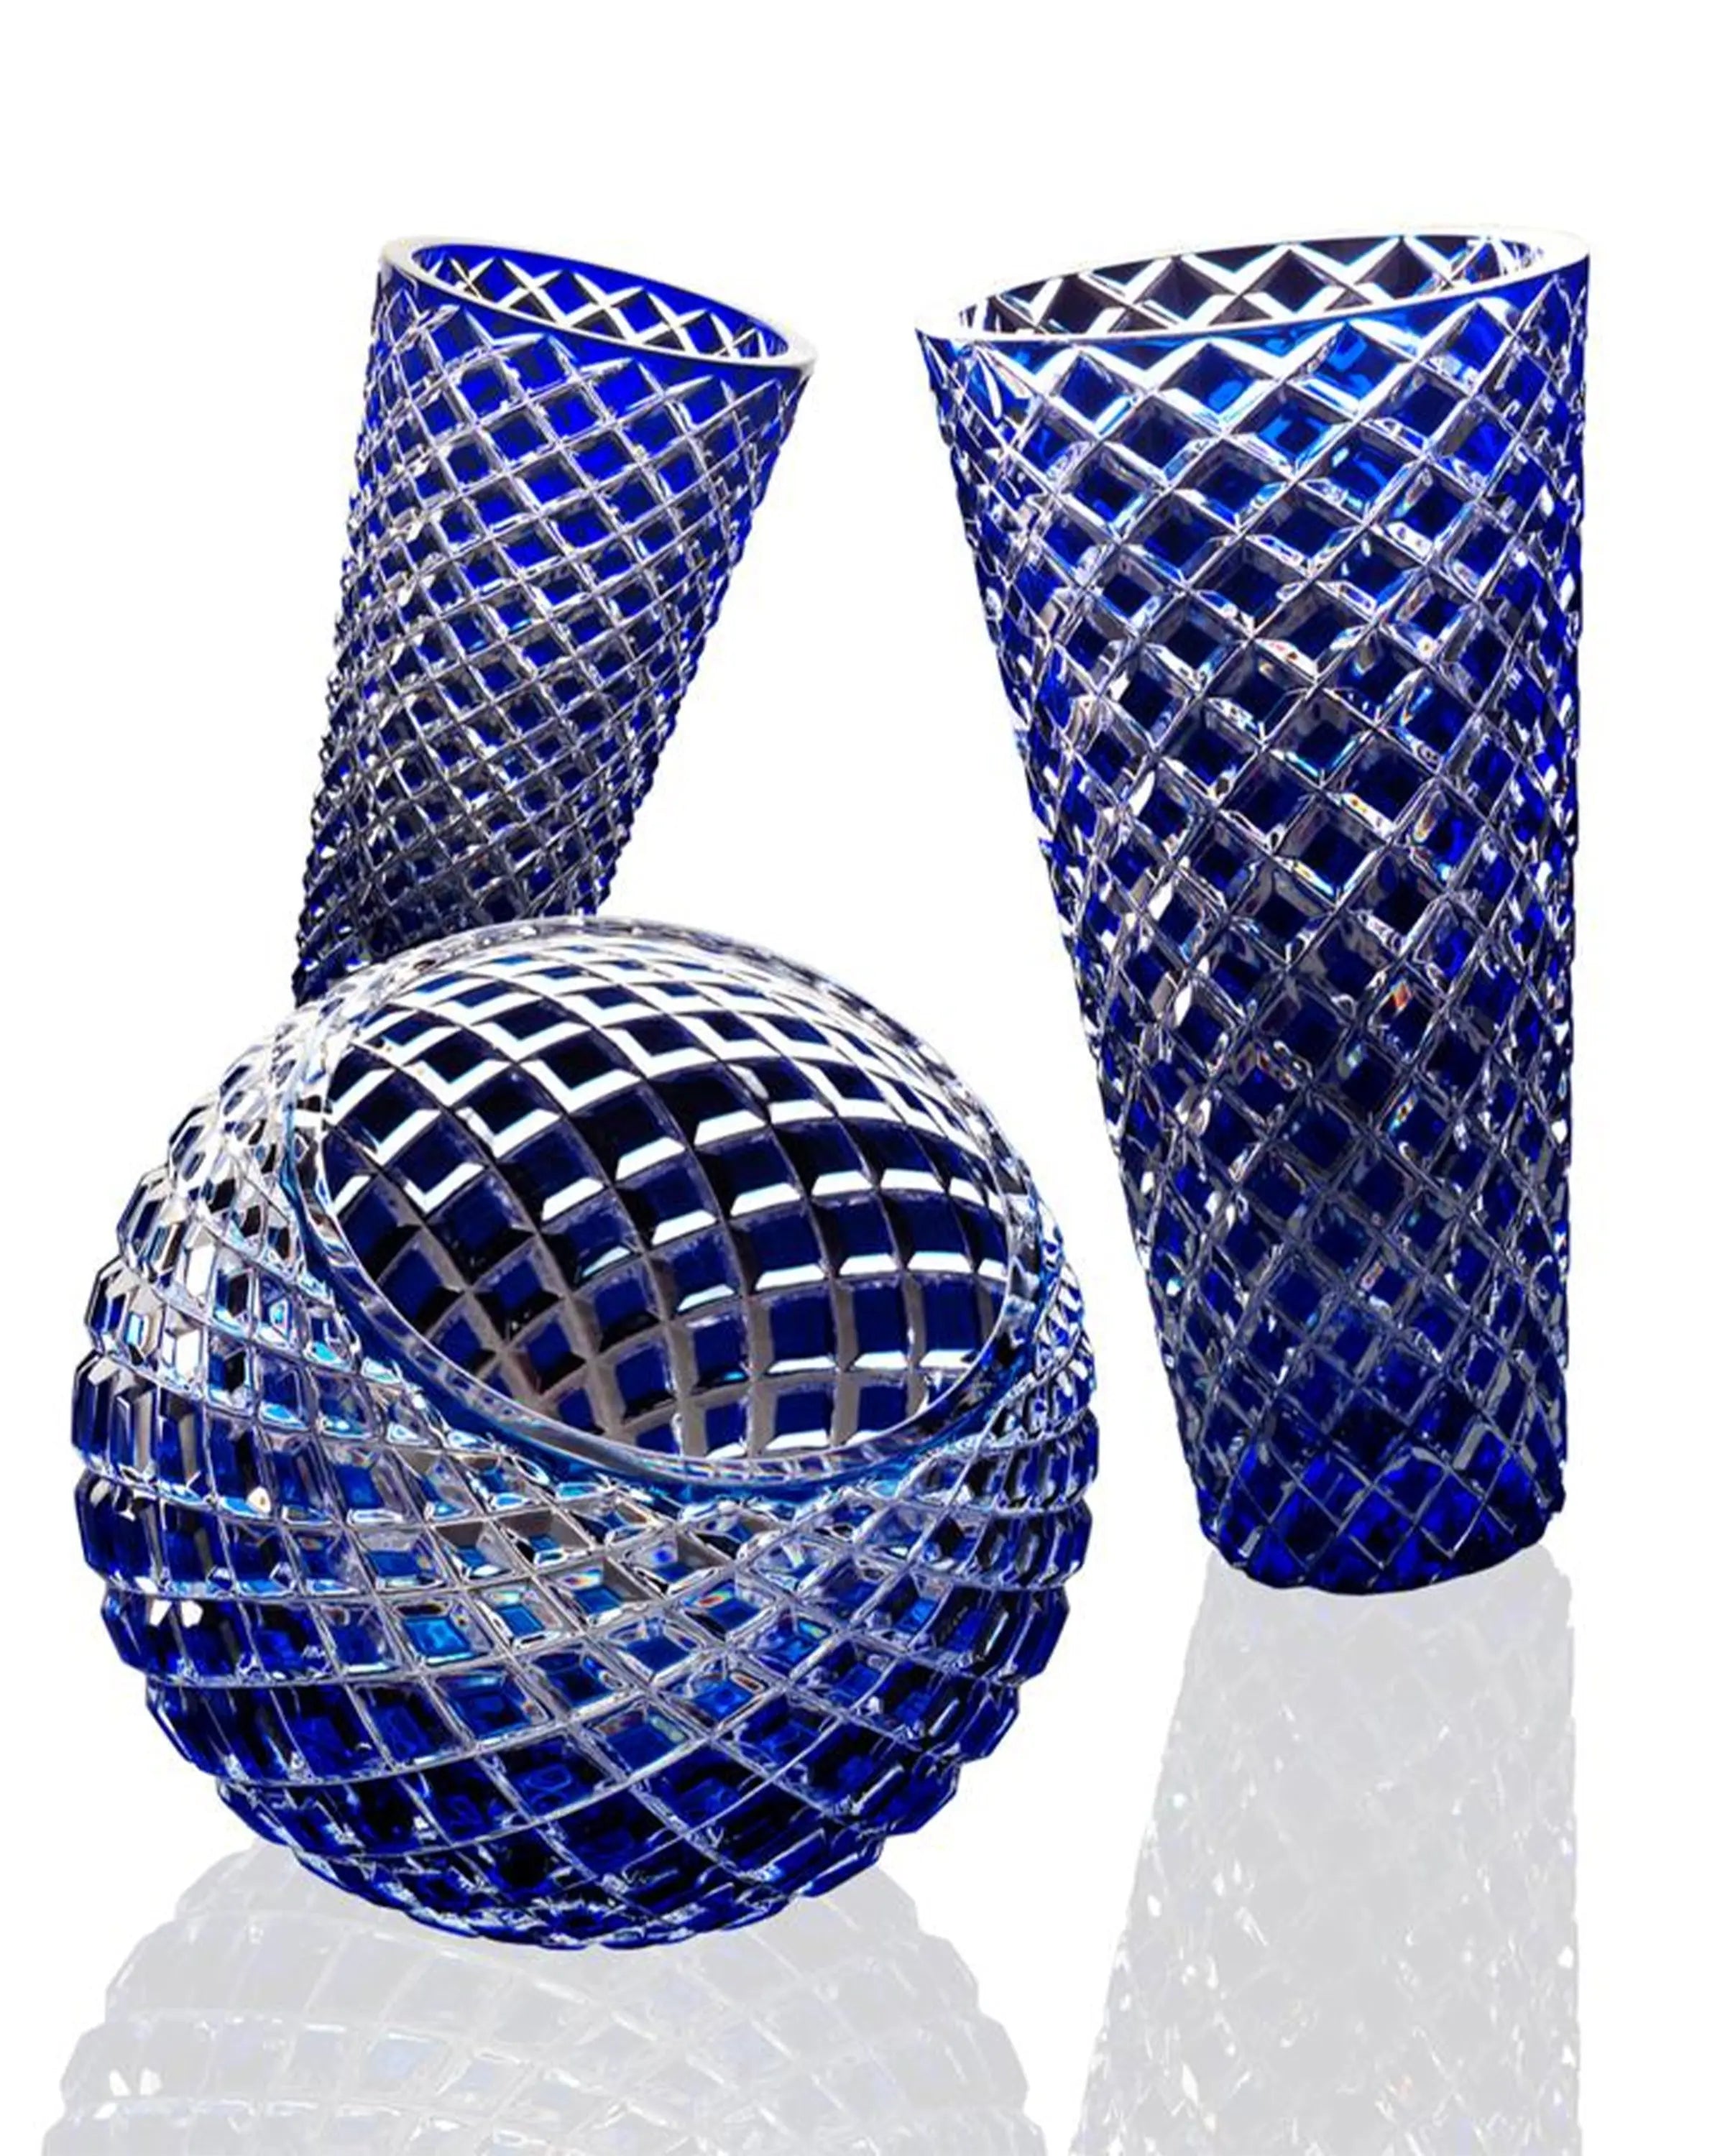  Luxury Vases Collection